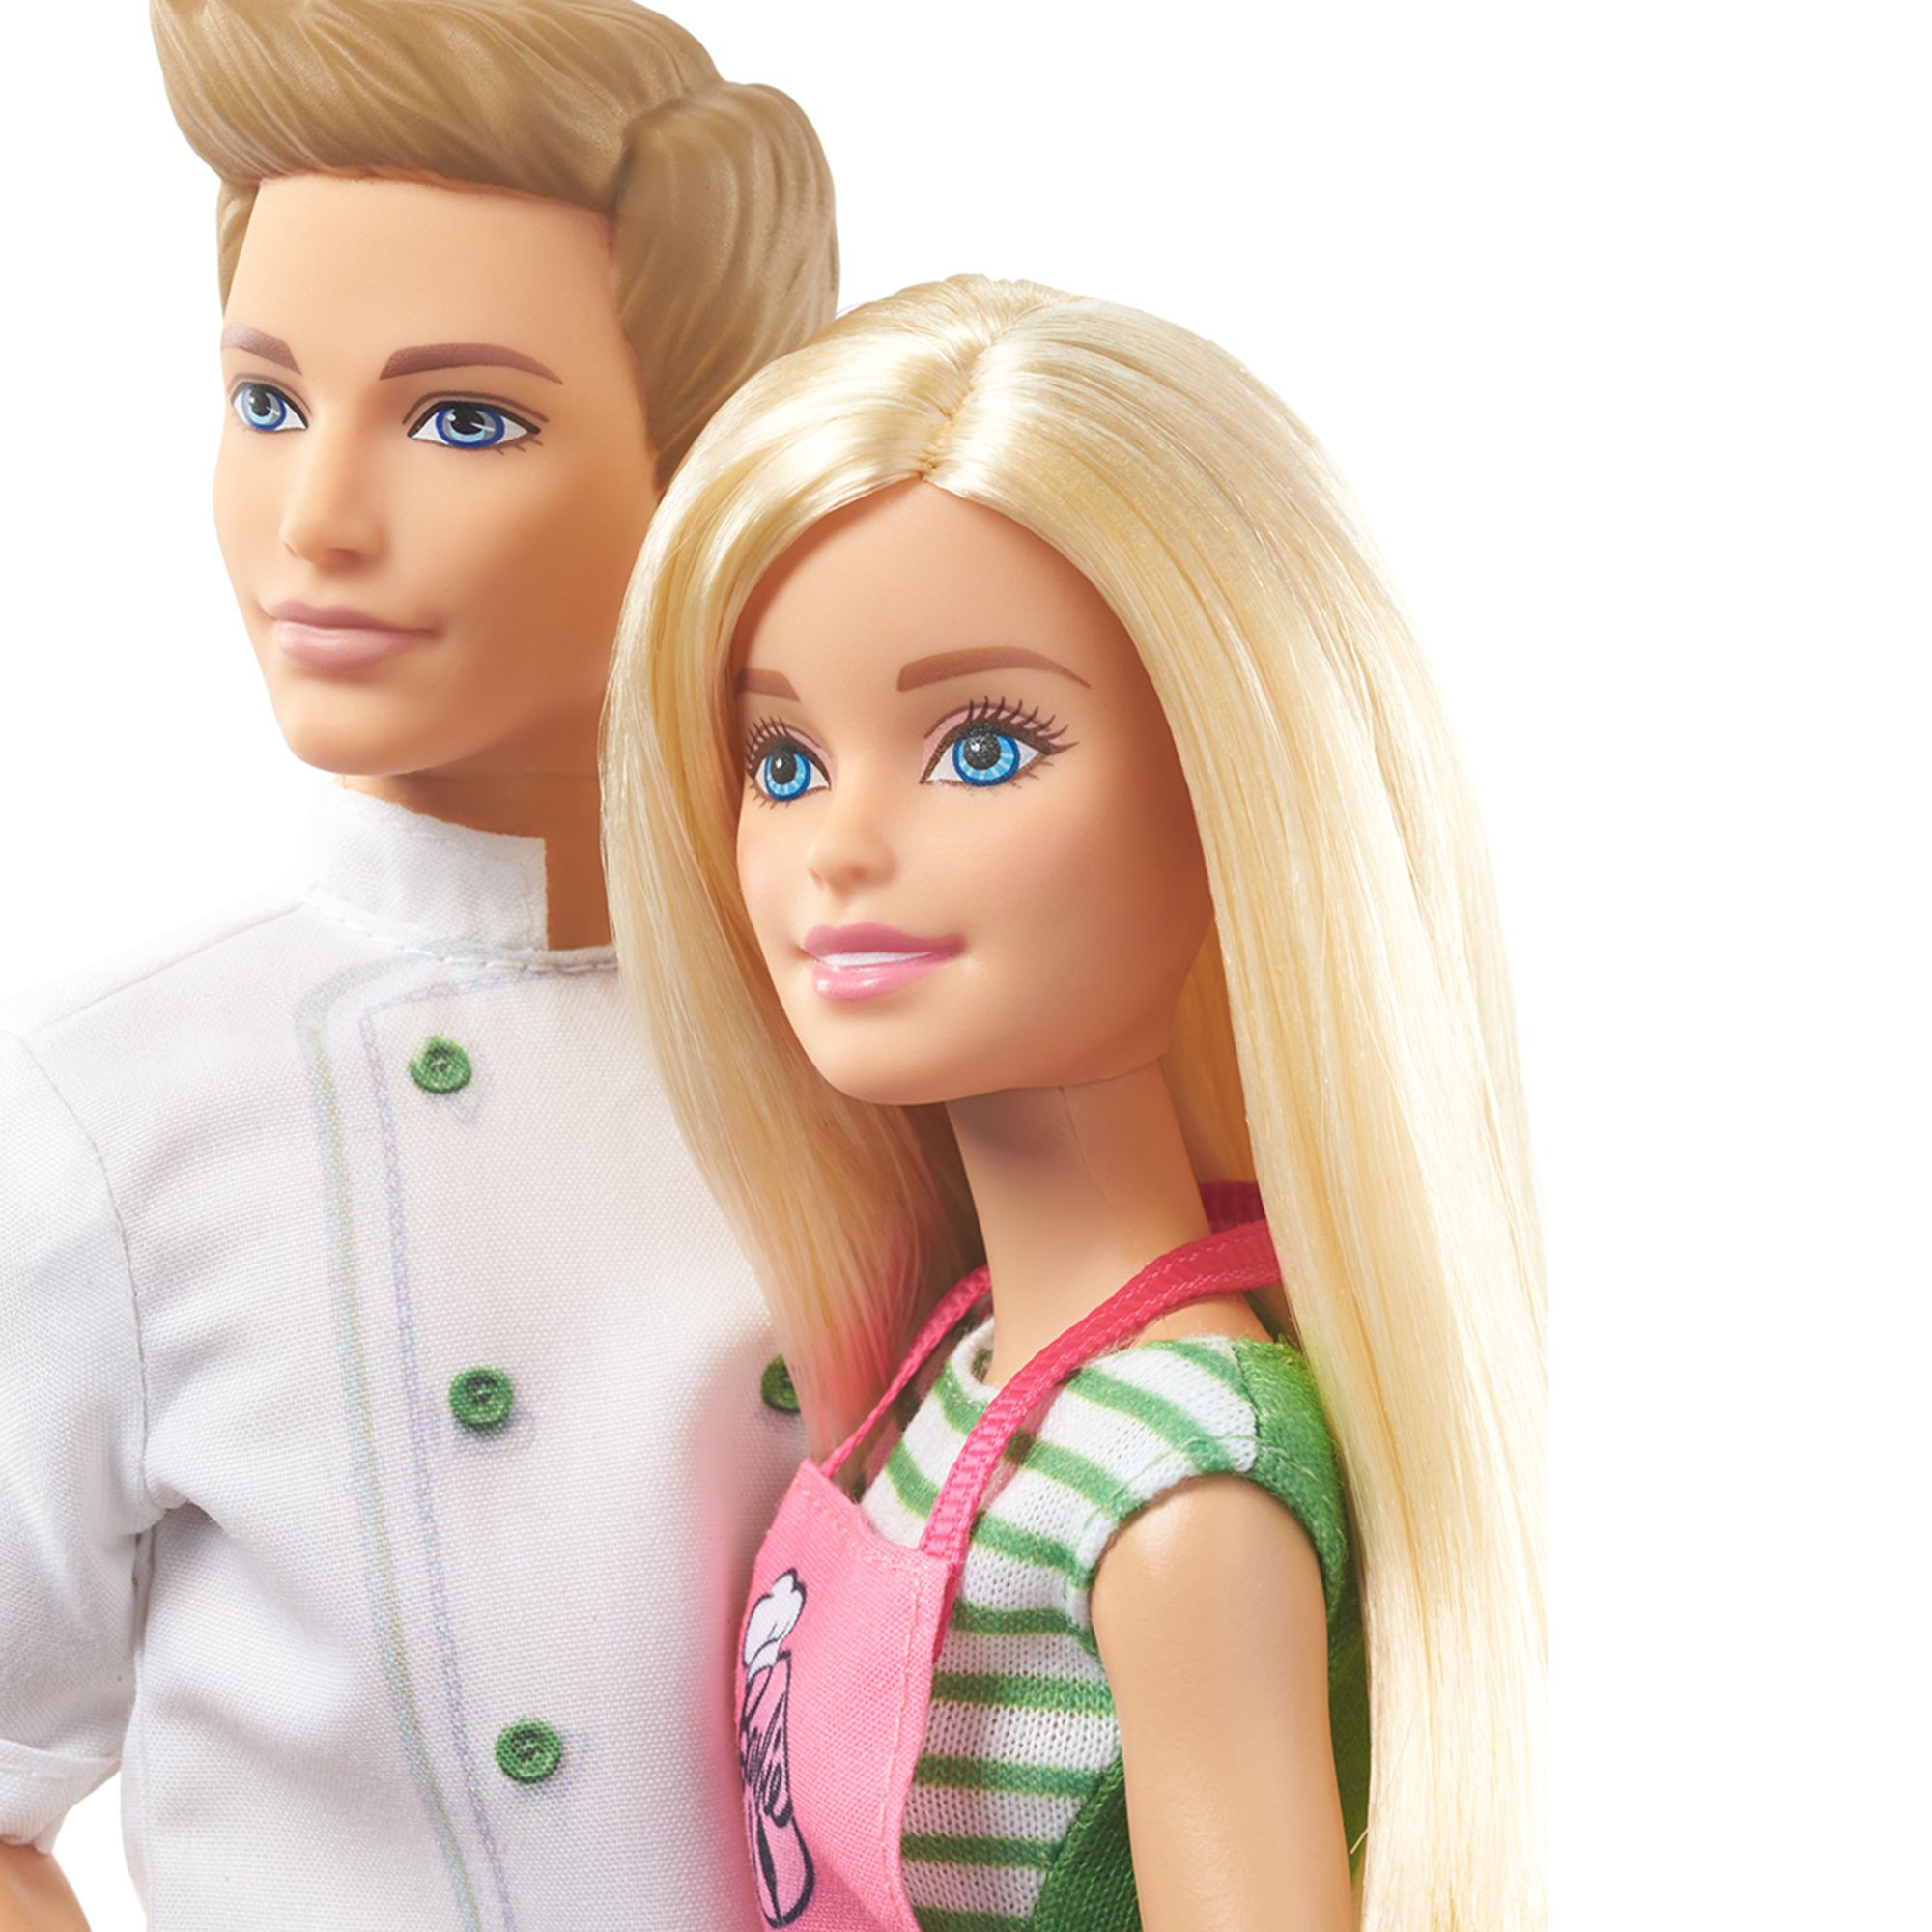 ken and barbie doll set